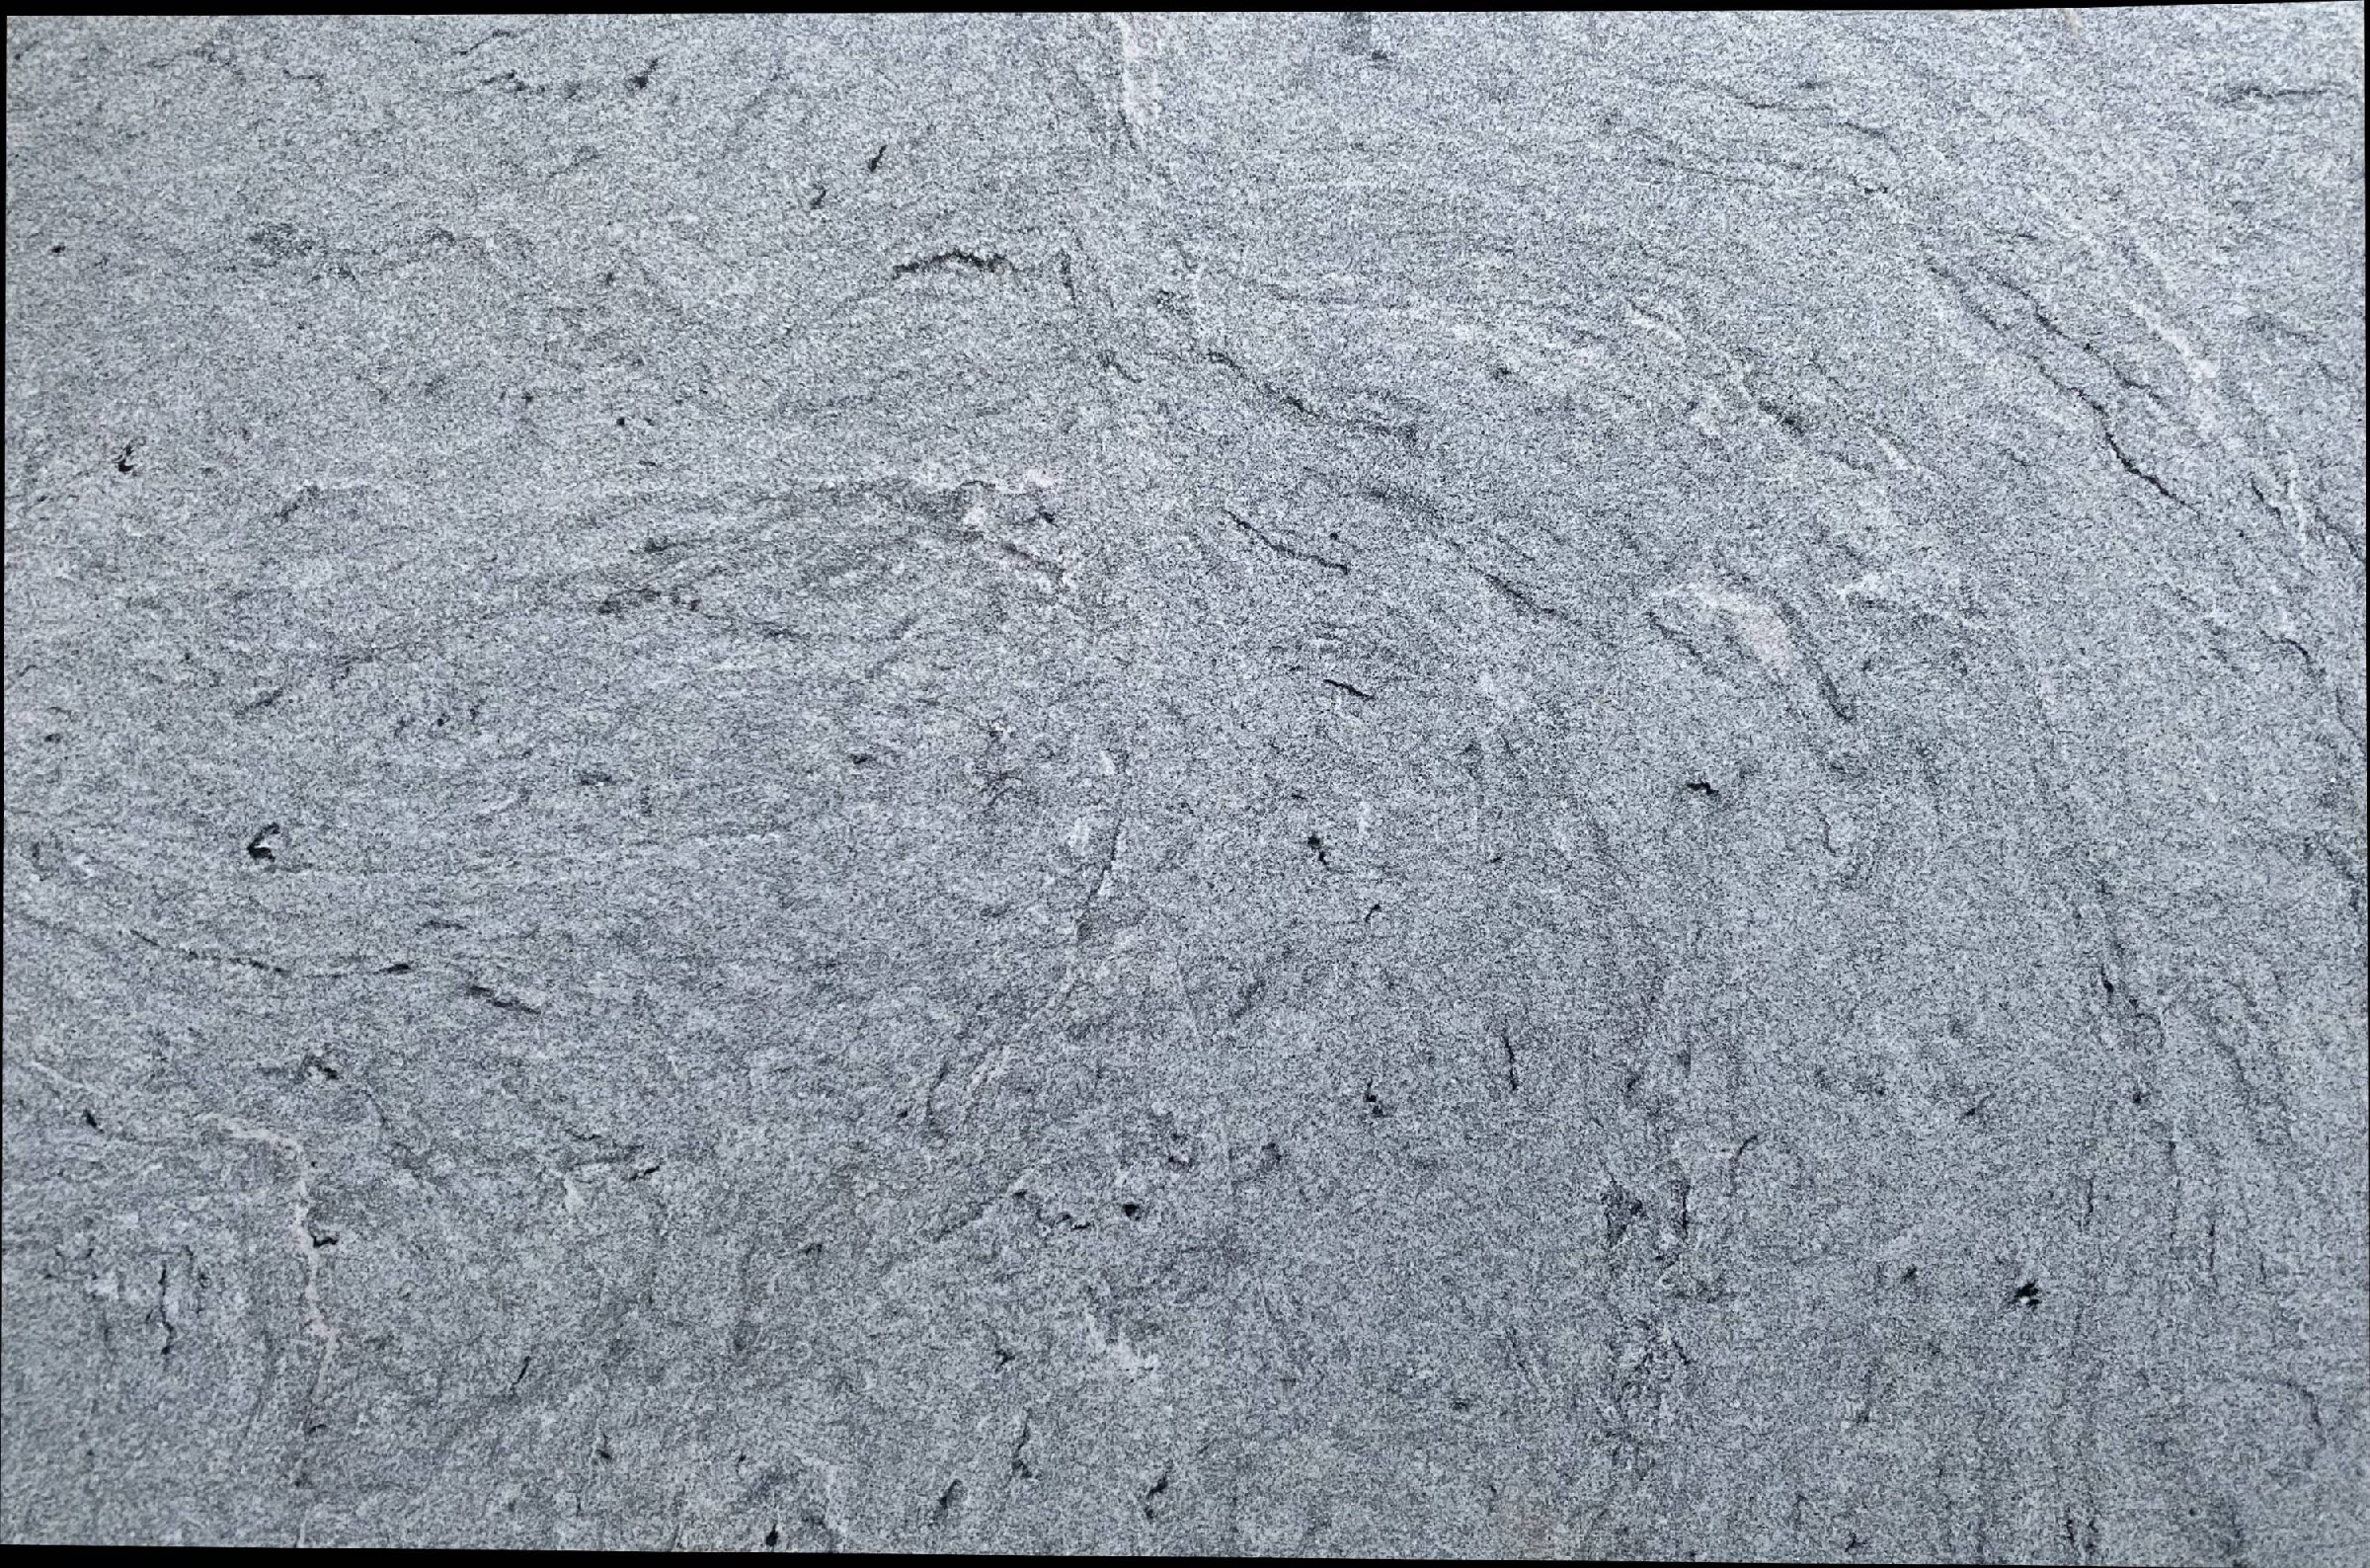 Viscont White Granite Slabs for Construction - E04771